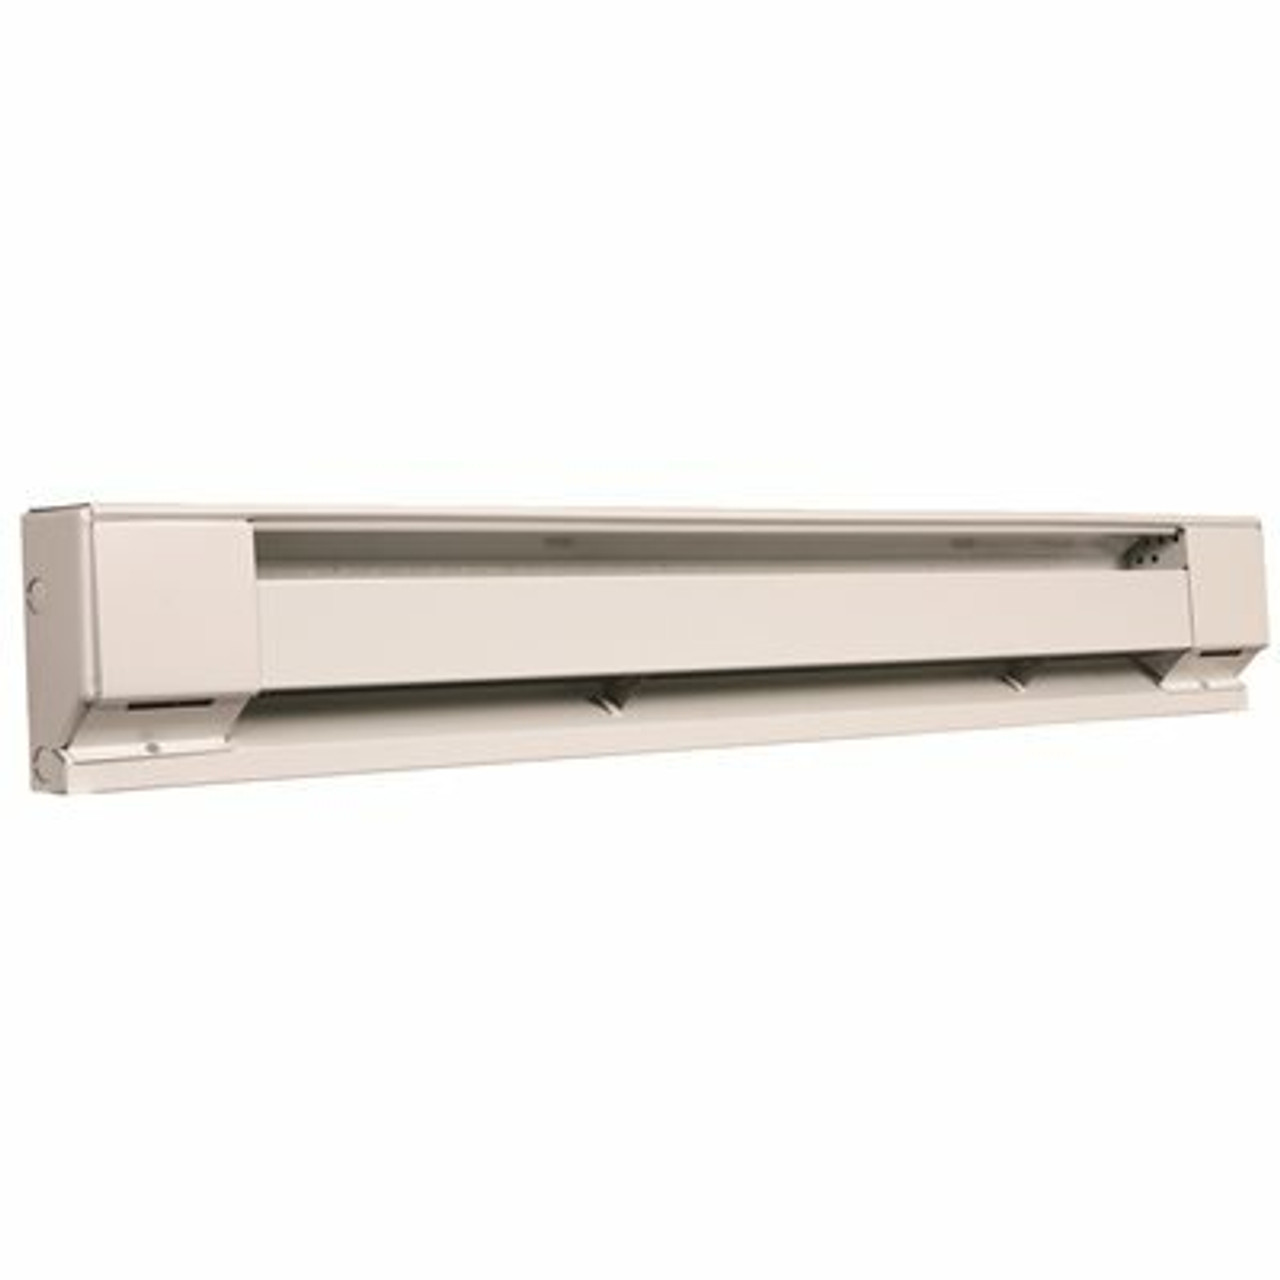 Marley Engineered Products Baseboard Heater 1000W 48" - 1633375